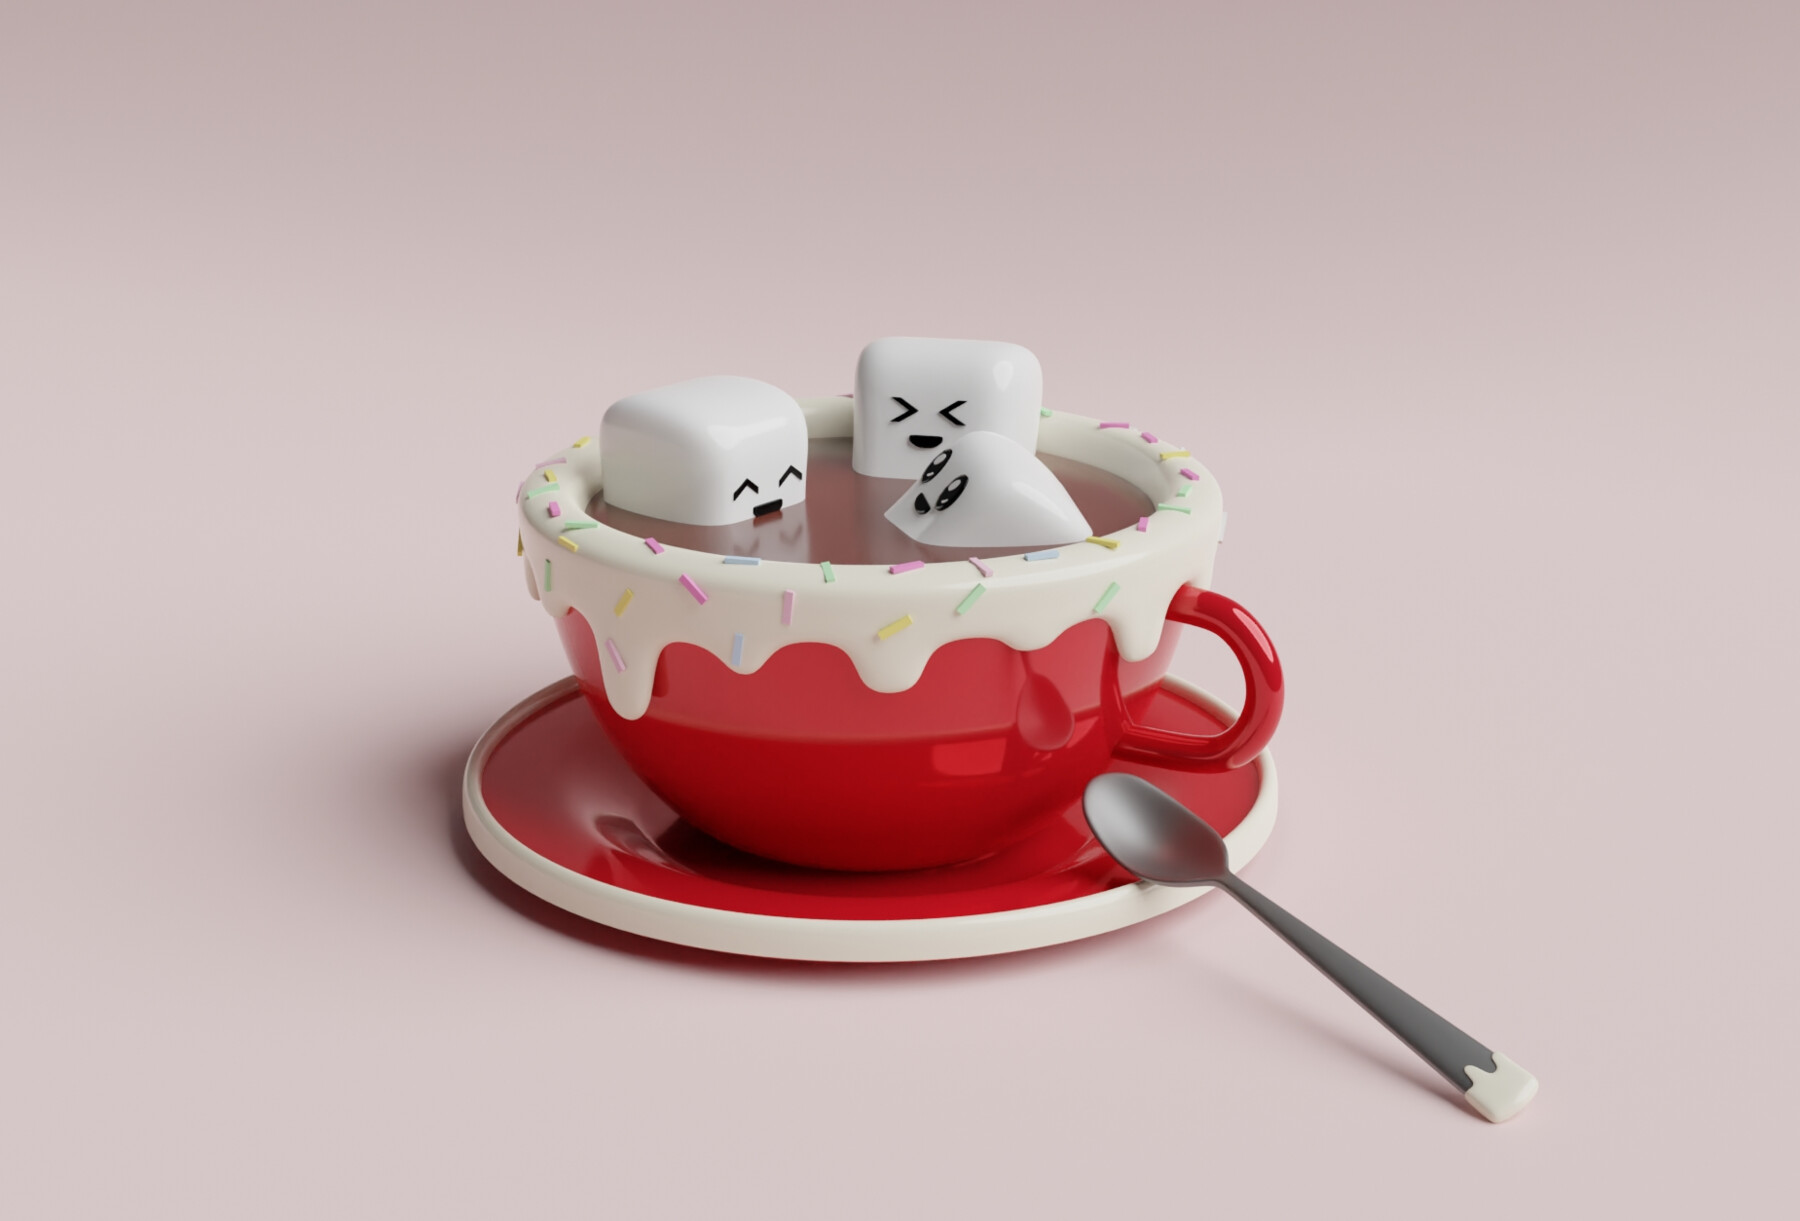 hot chocolate with marshmallows cartoon